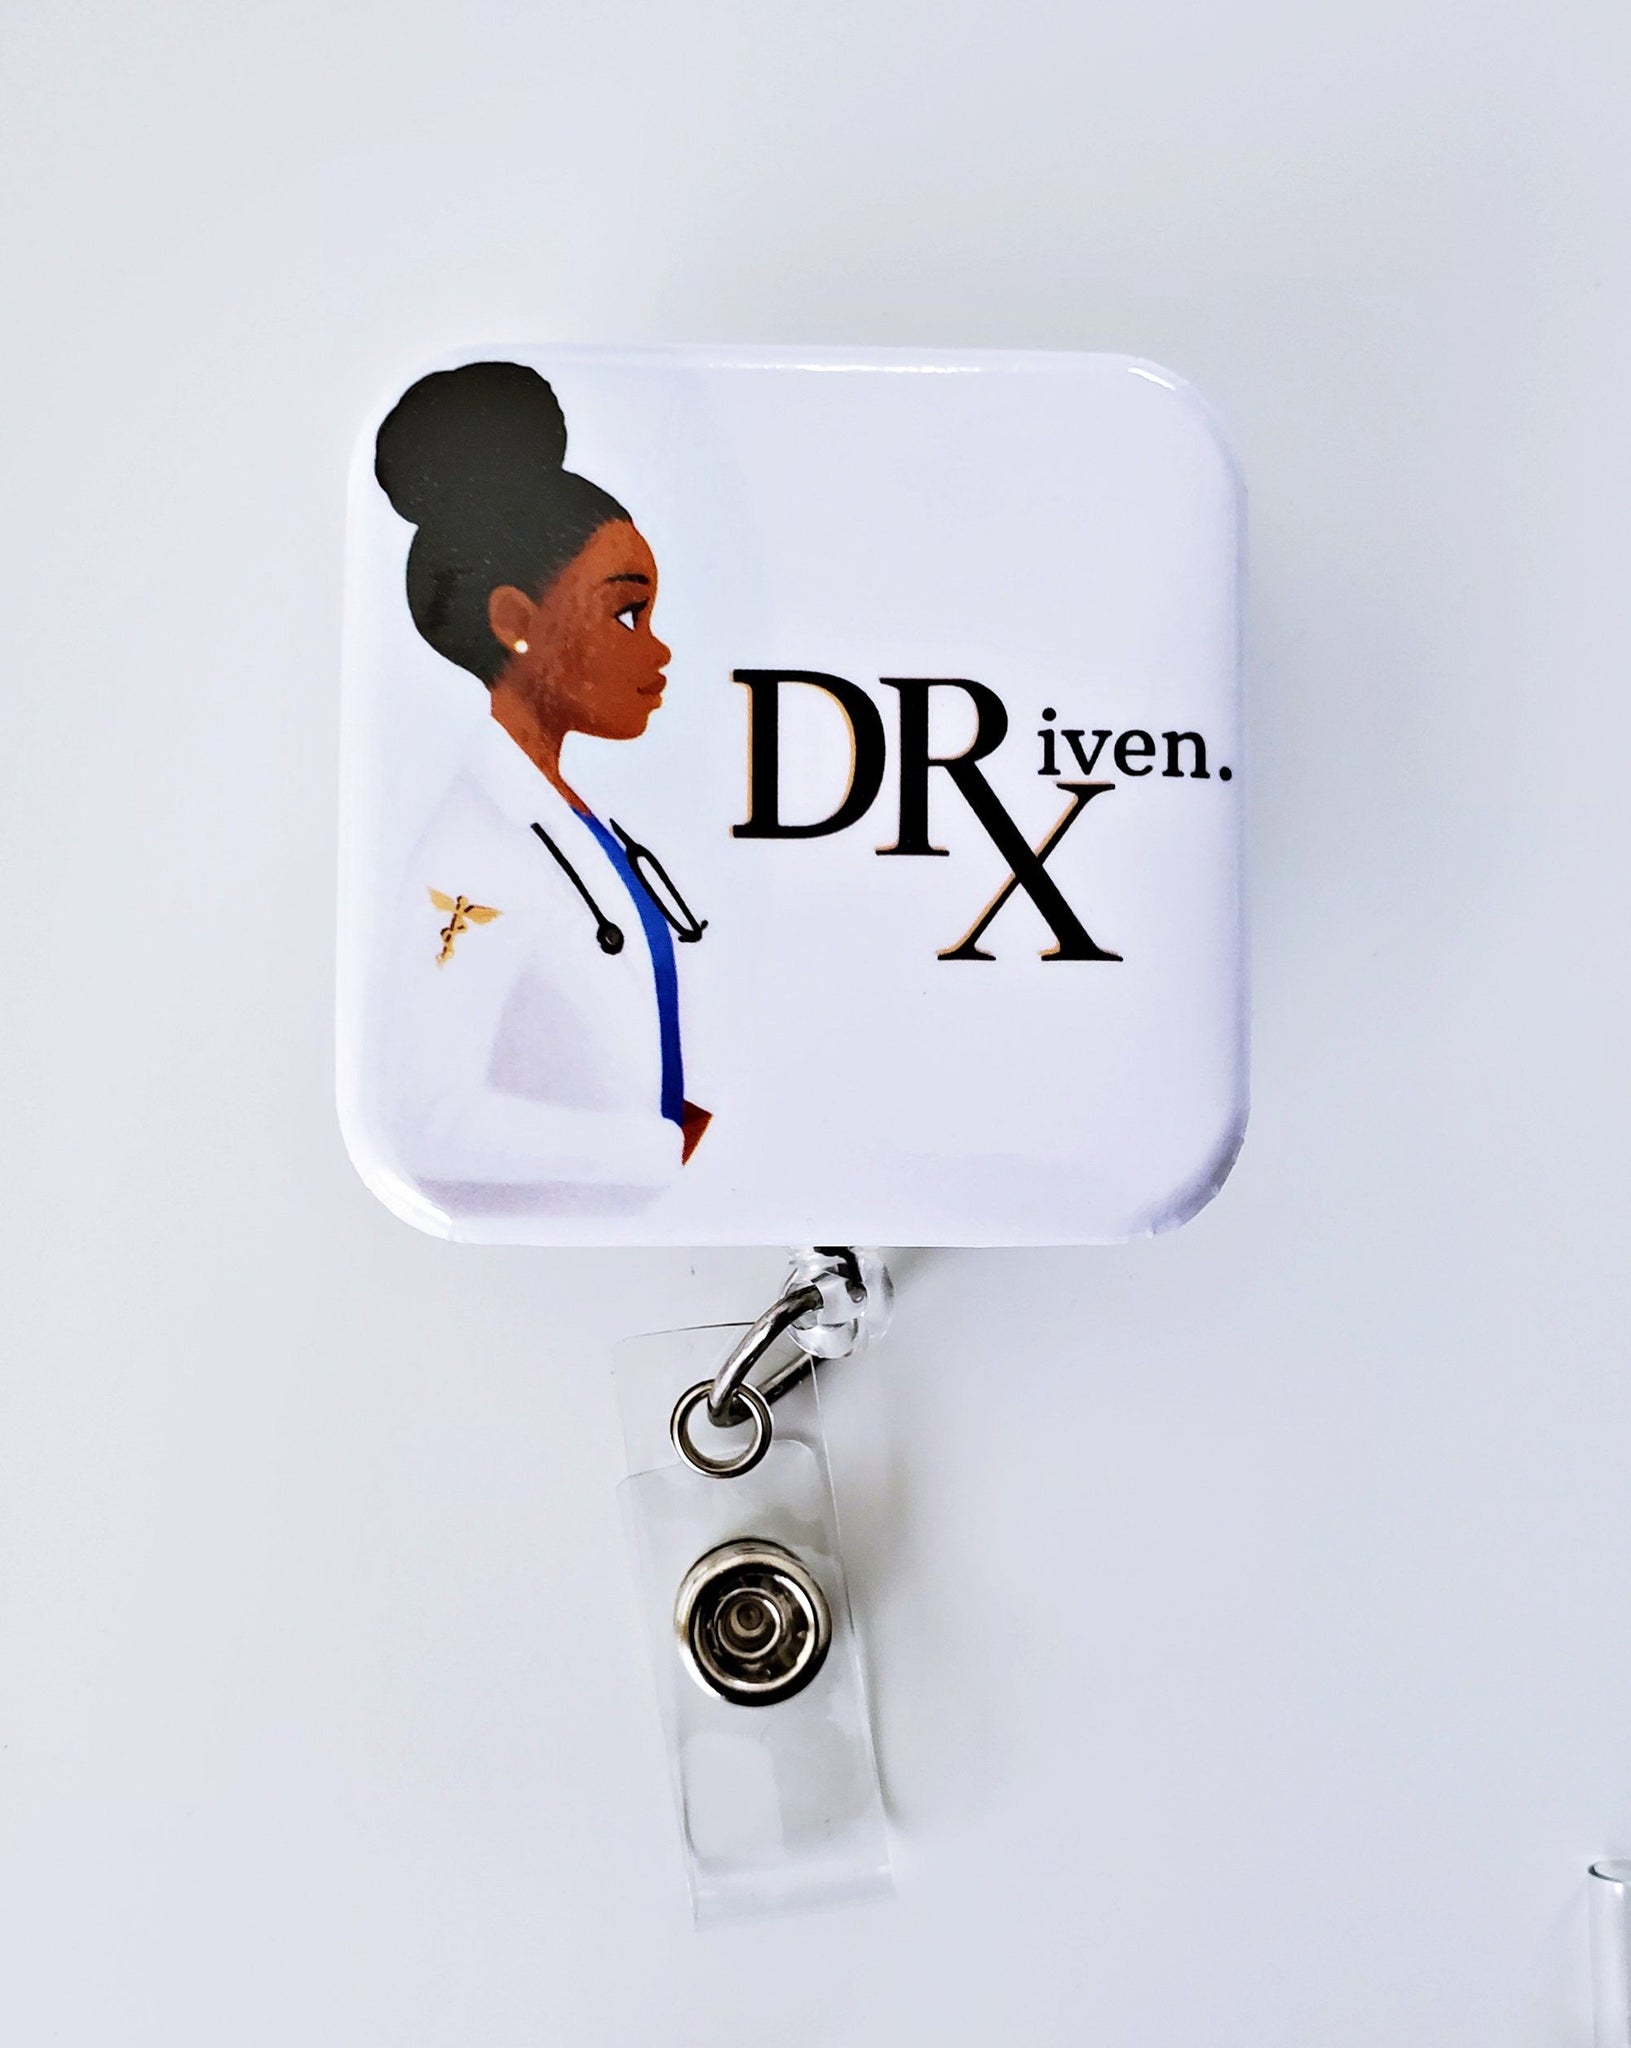 Retractable ID Badge Holder - Personalized Name - Pharmacy Tech Kawaii / Pharmacy / Pharmacist / Badge Reel